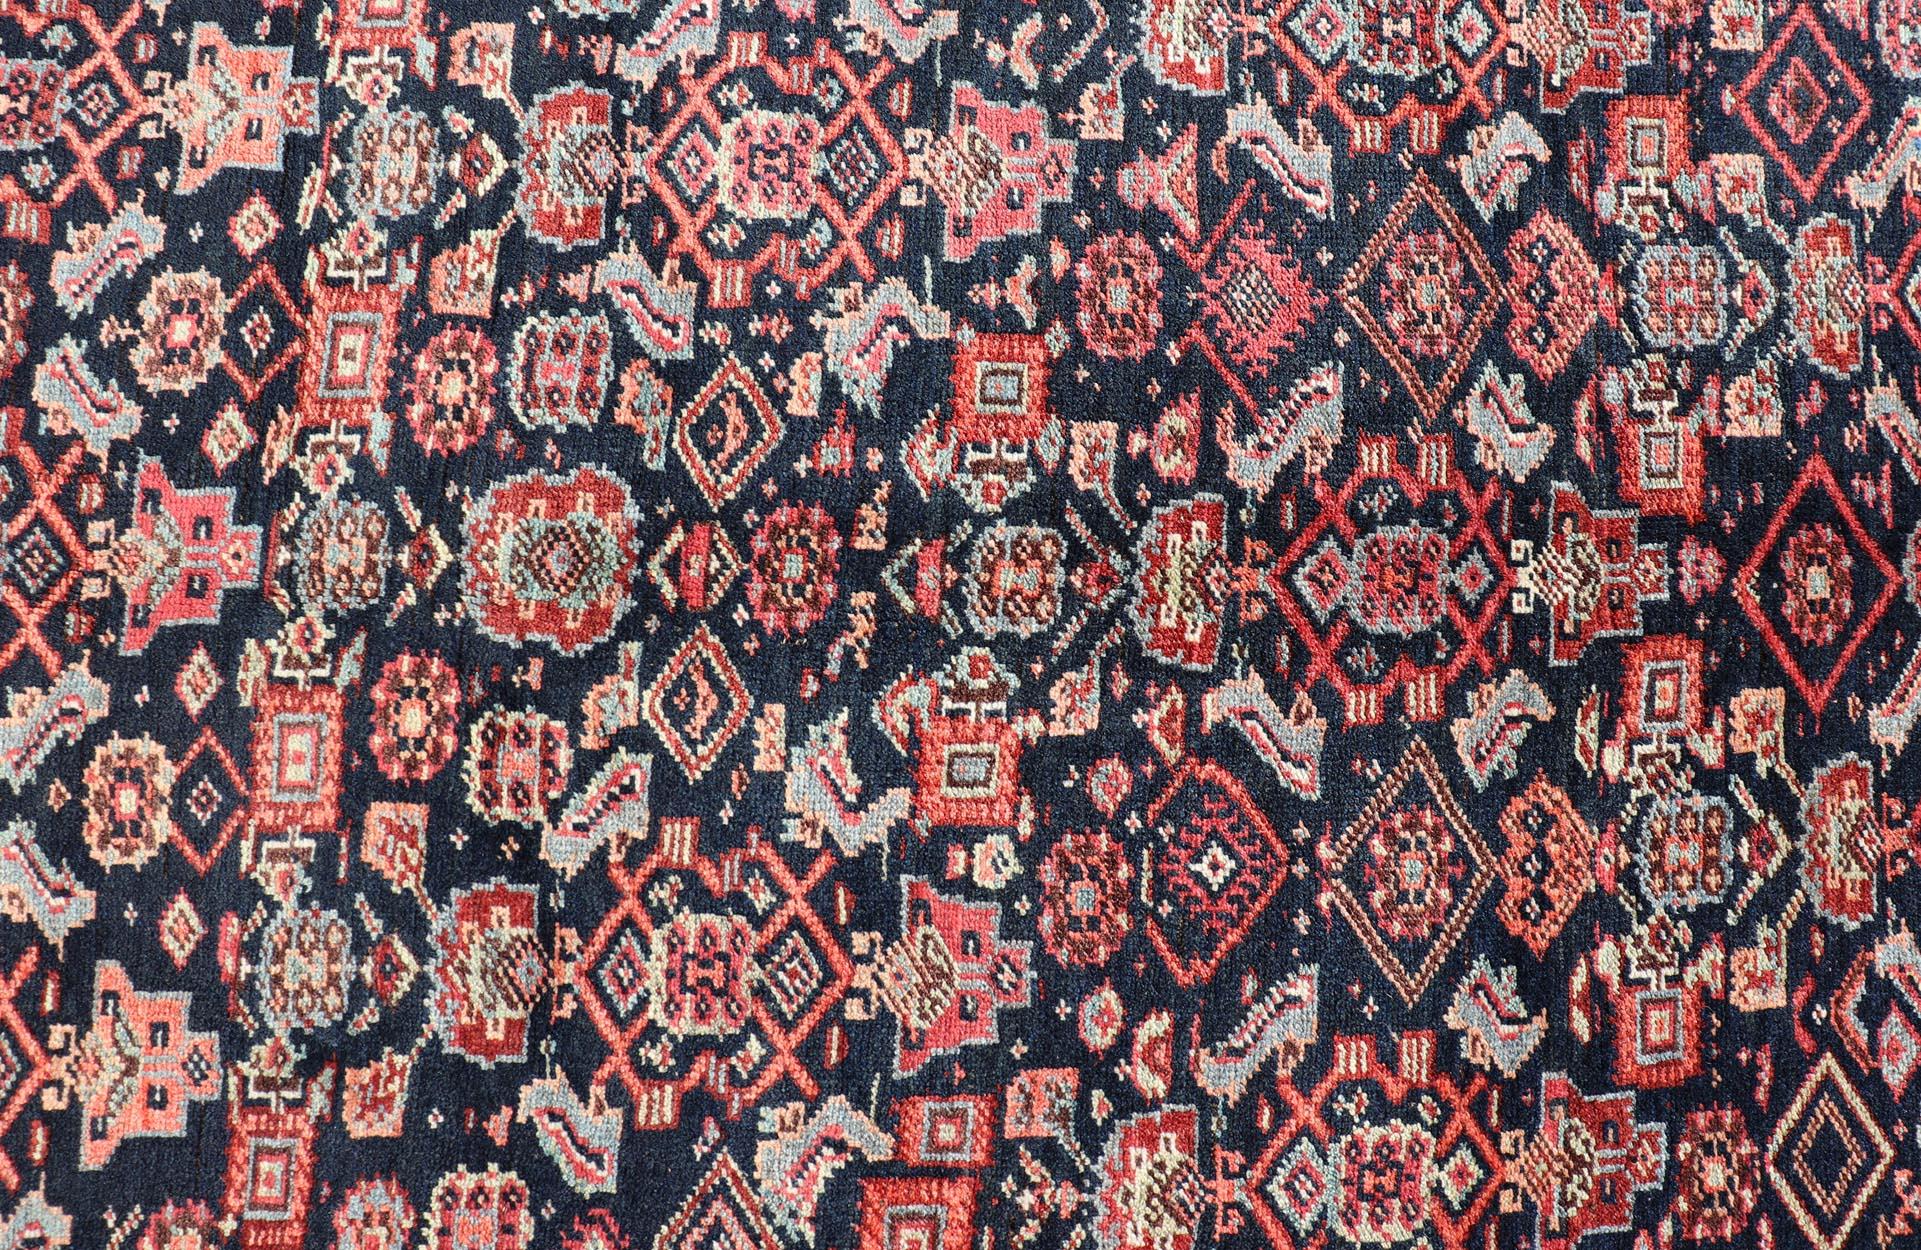 Measures: 6'2 x 16'4
Antique Persian Bidjar Long Gallery Rug with All-Over Sub-Geometric Design. Keivan Woven Arts; rug EMB-22111-15107; country of origin / type: Persian / Bidjar, circa 1910.

This antique Persian Bidjar long gallery sized rug